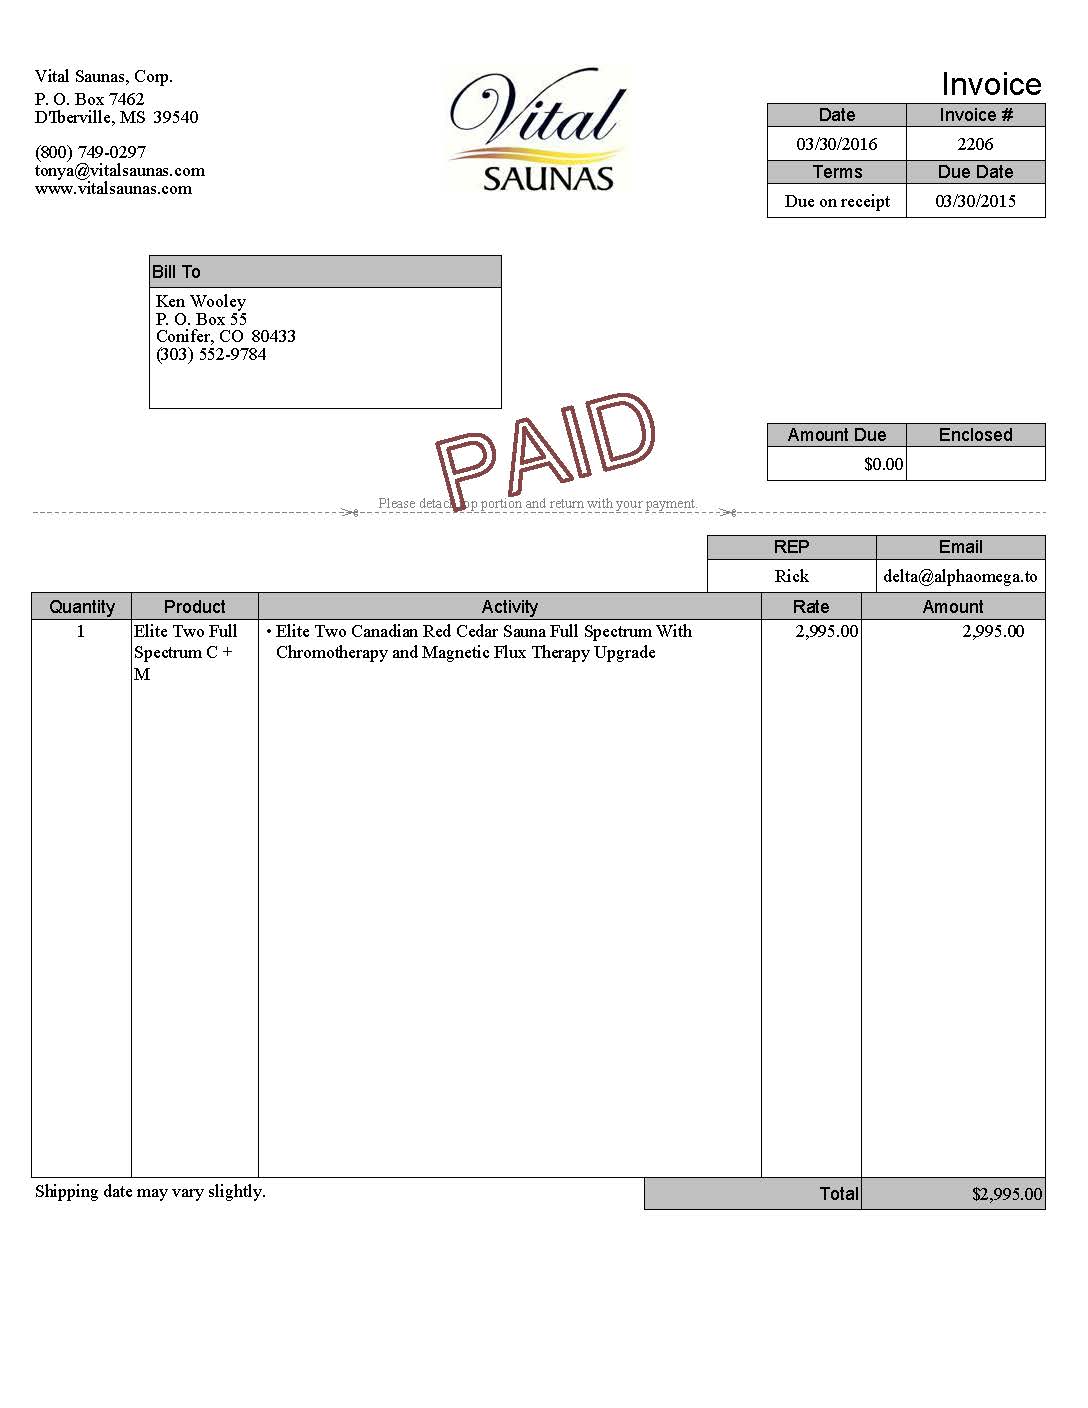 Invoice from Vital Saunas USA